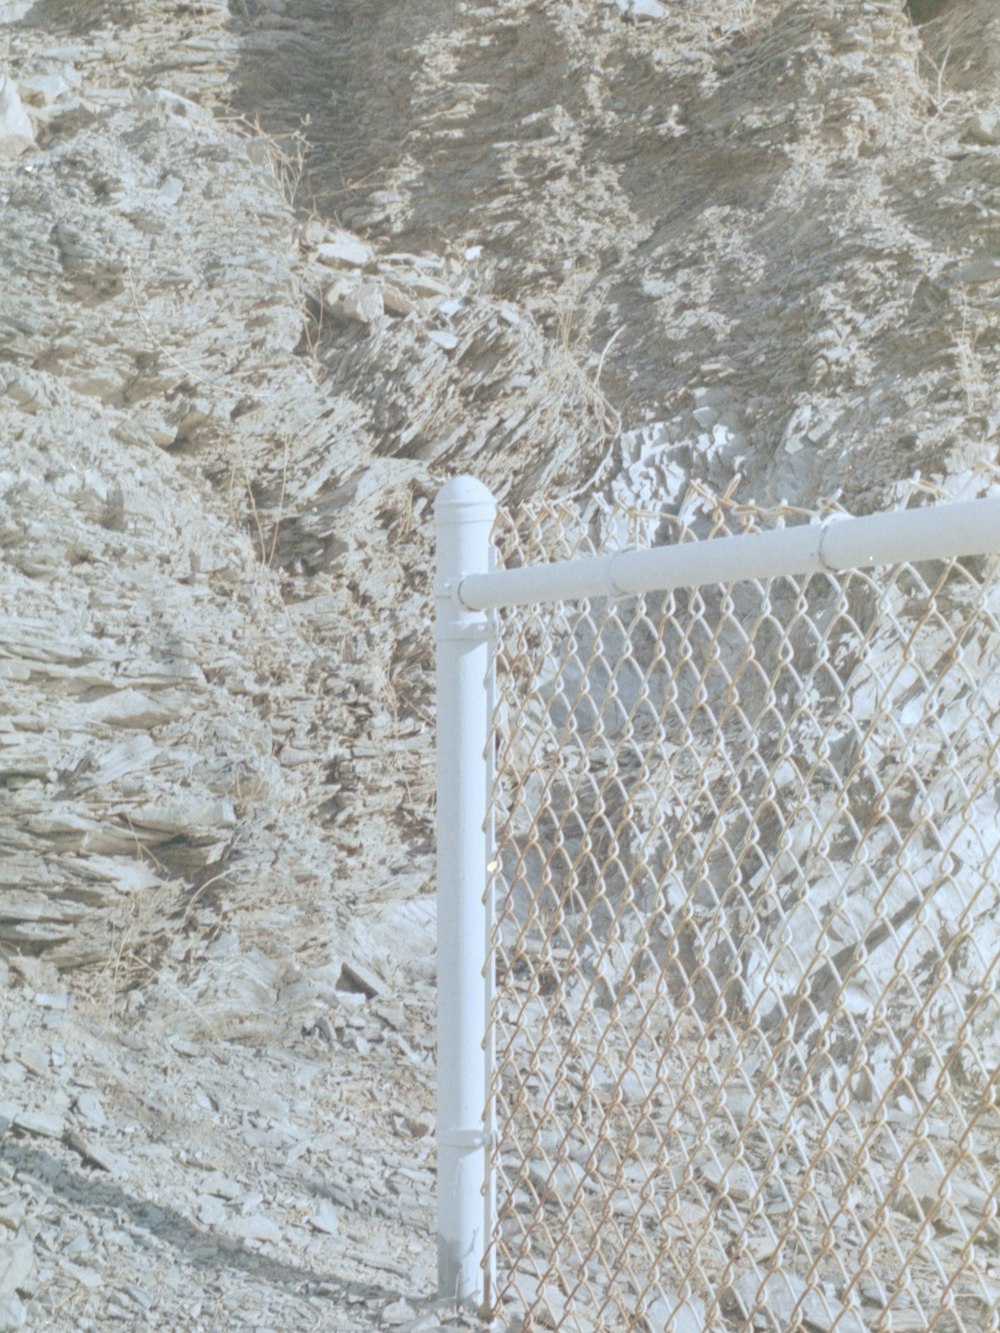 white metal fence near rocky mountain during daytime